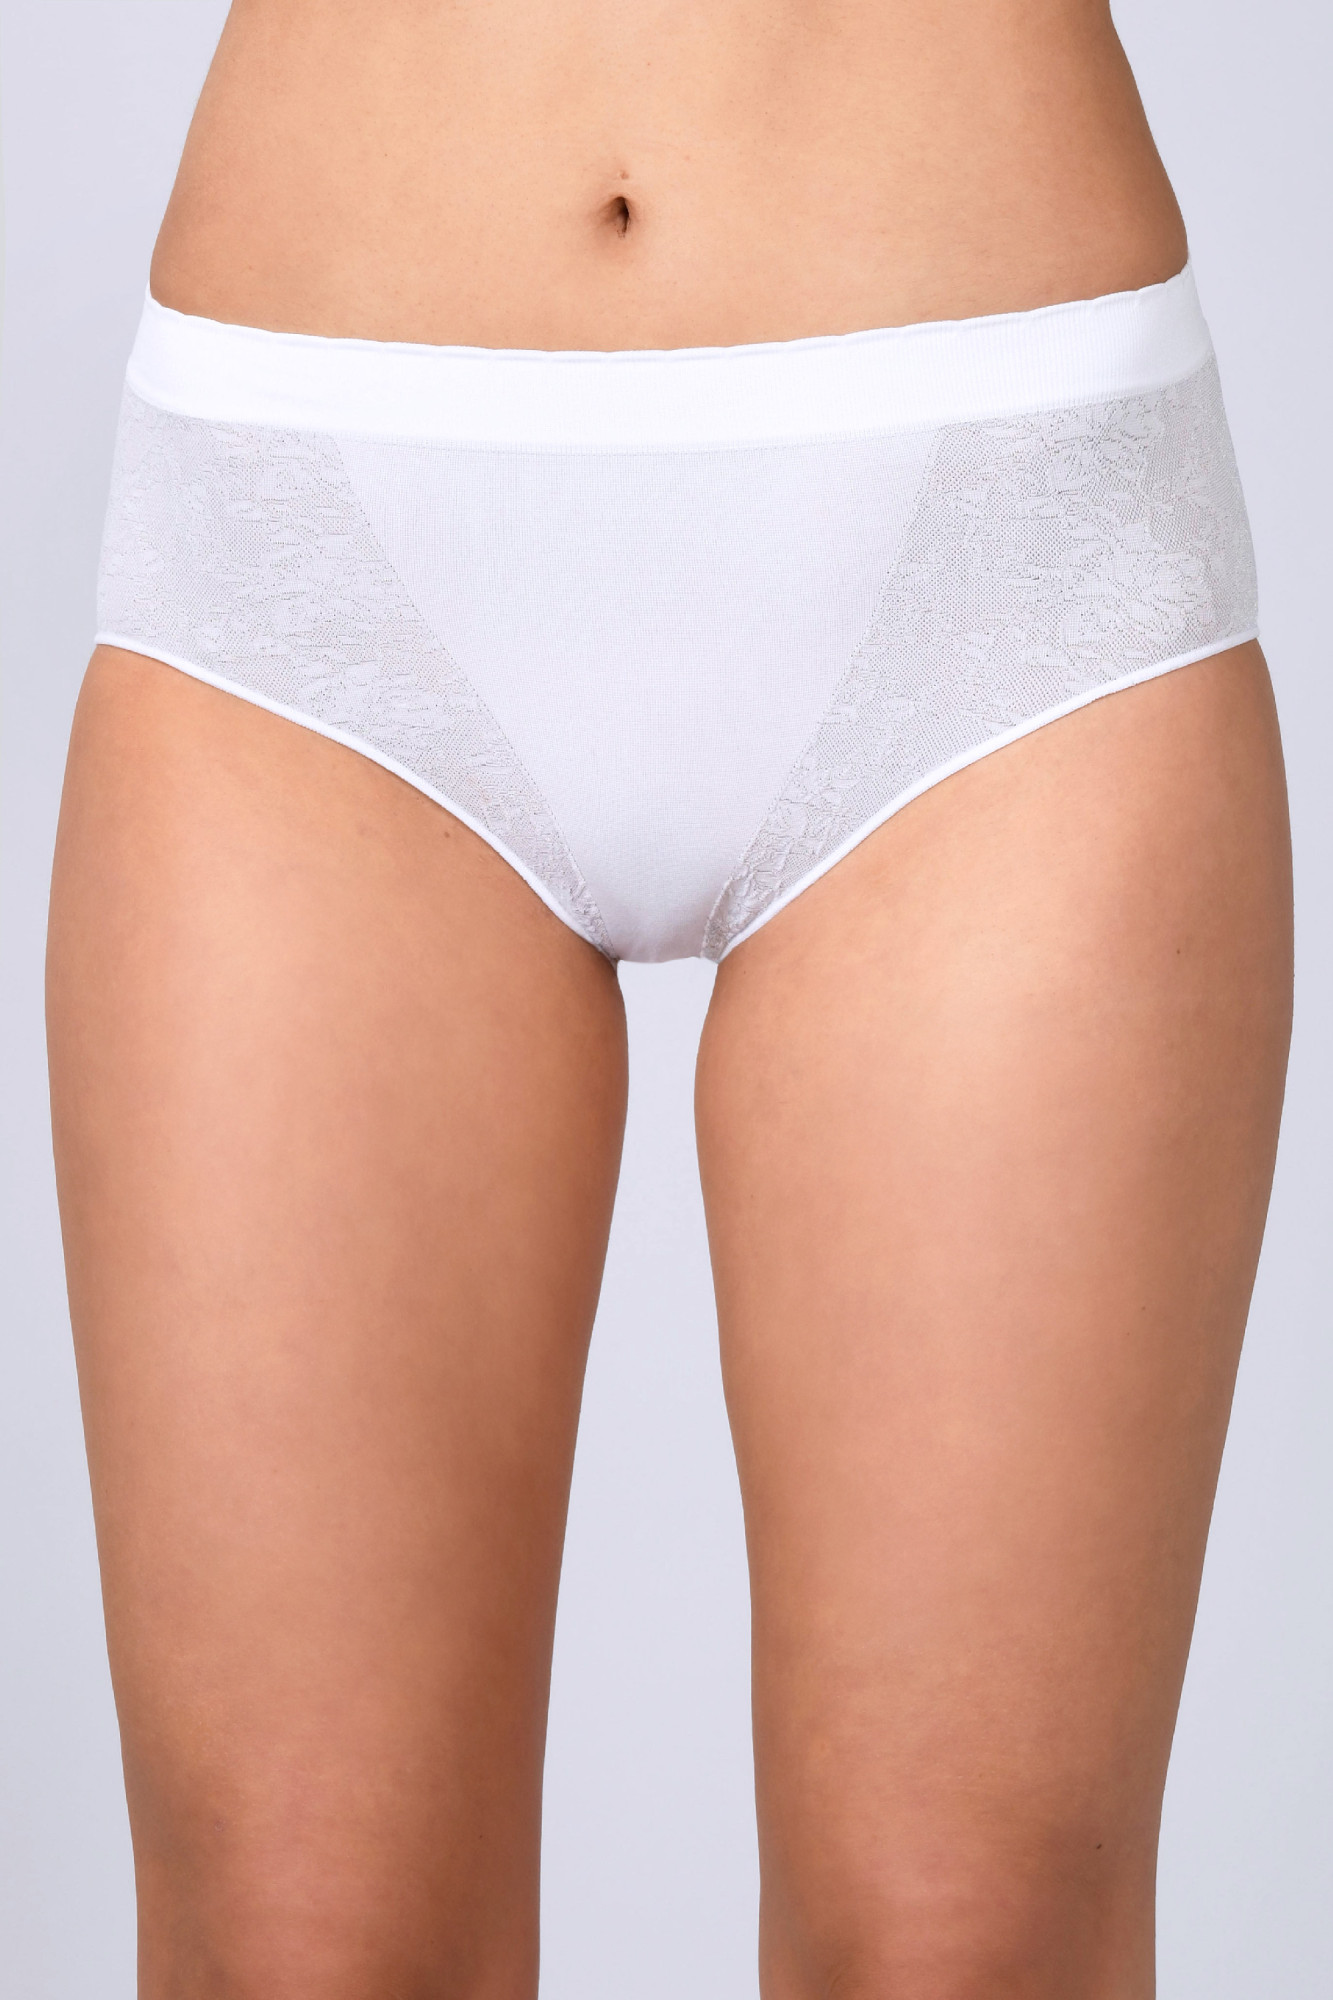 Kalhotky klasické bezešvé Setificato Daily Intimidea Barva: Bílá, velikost L/XL